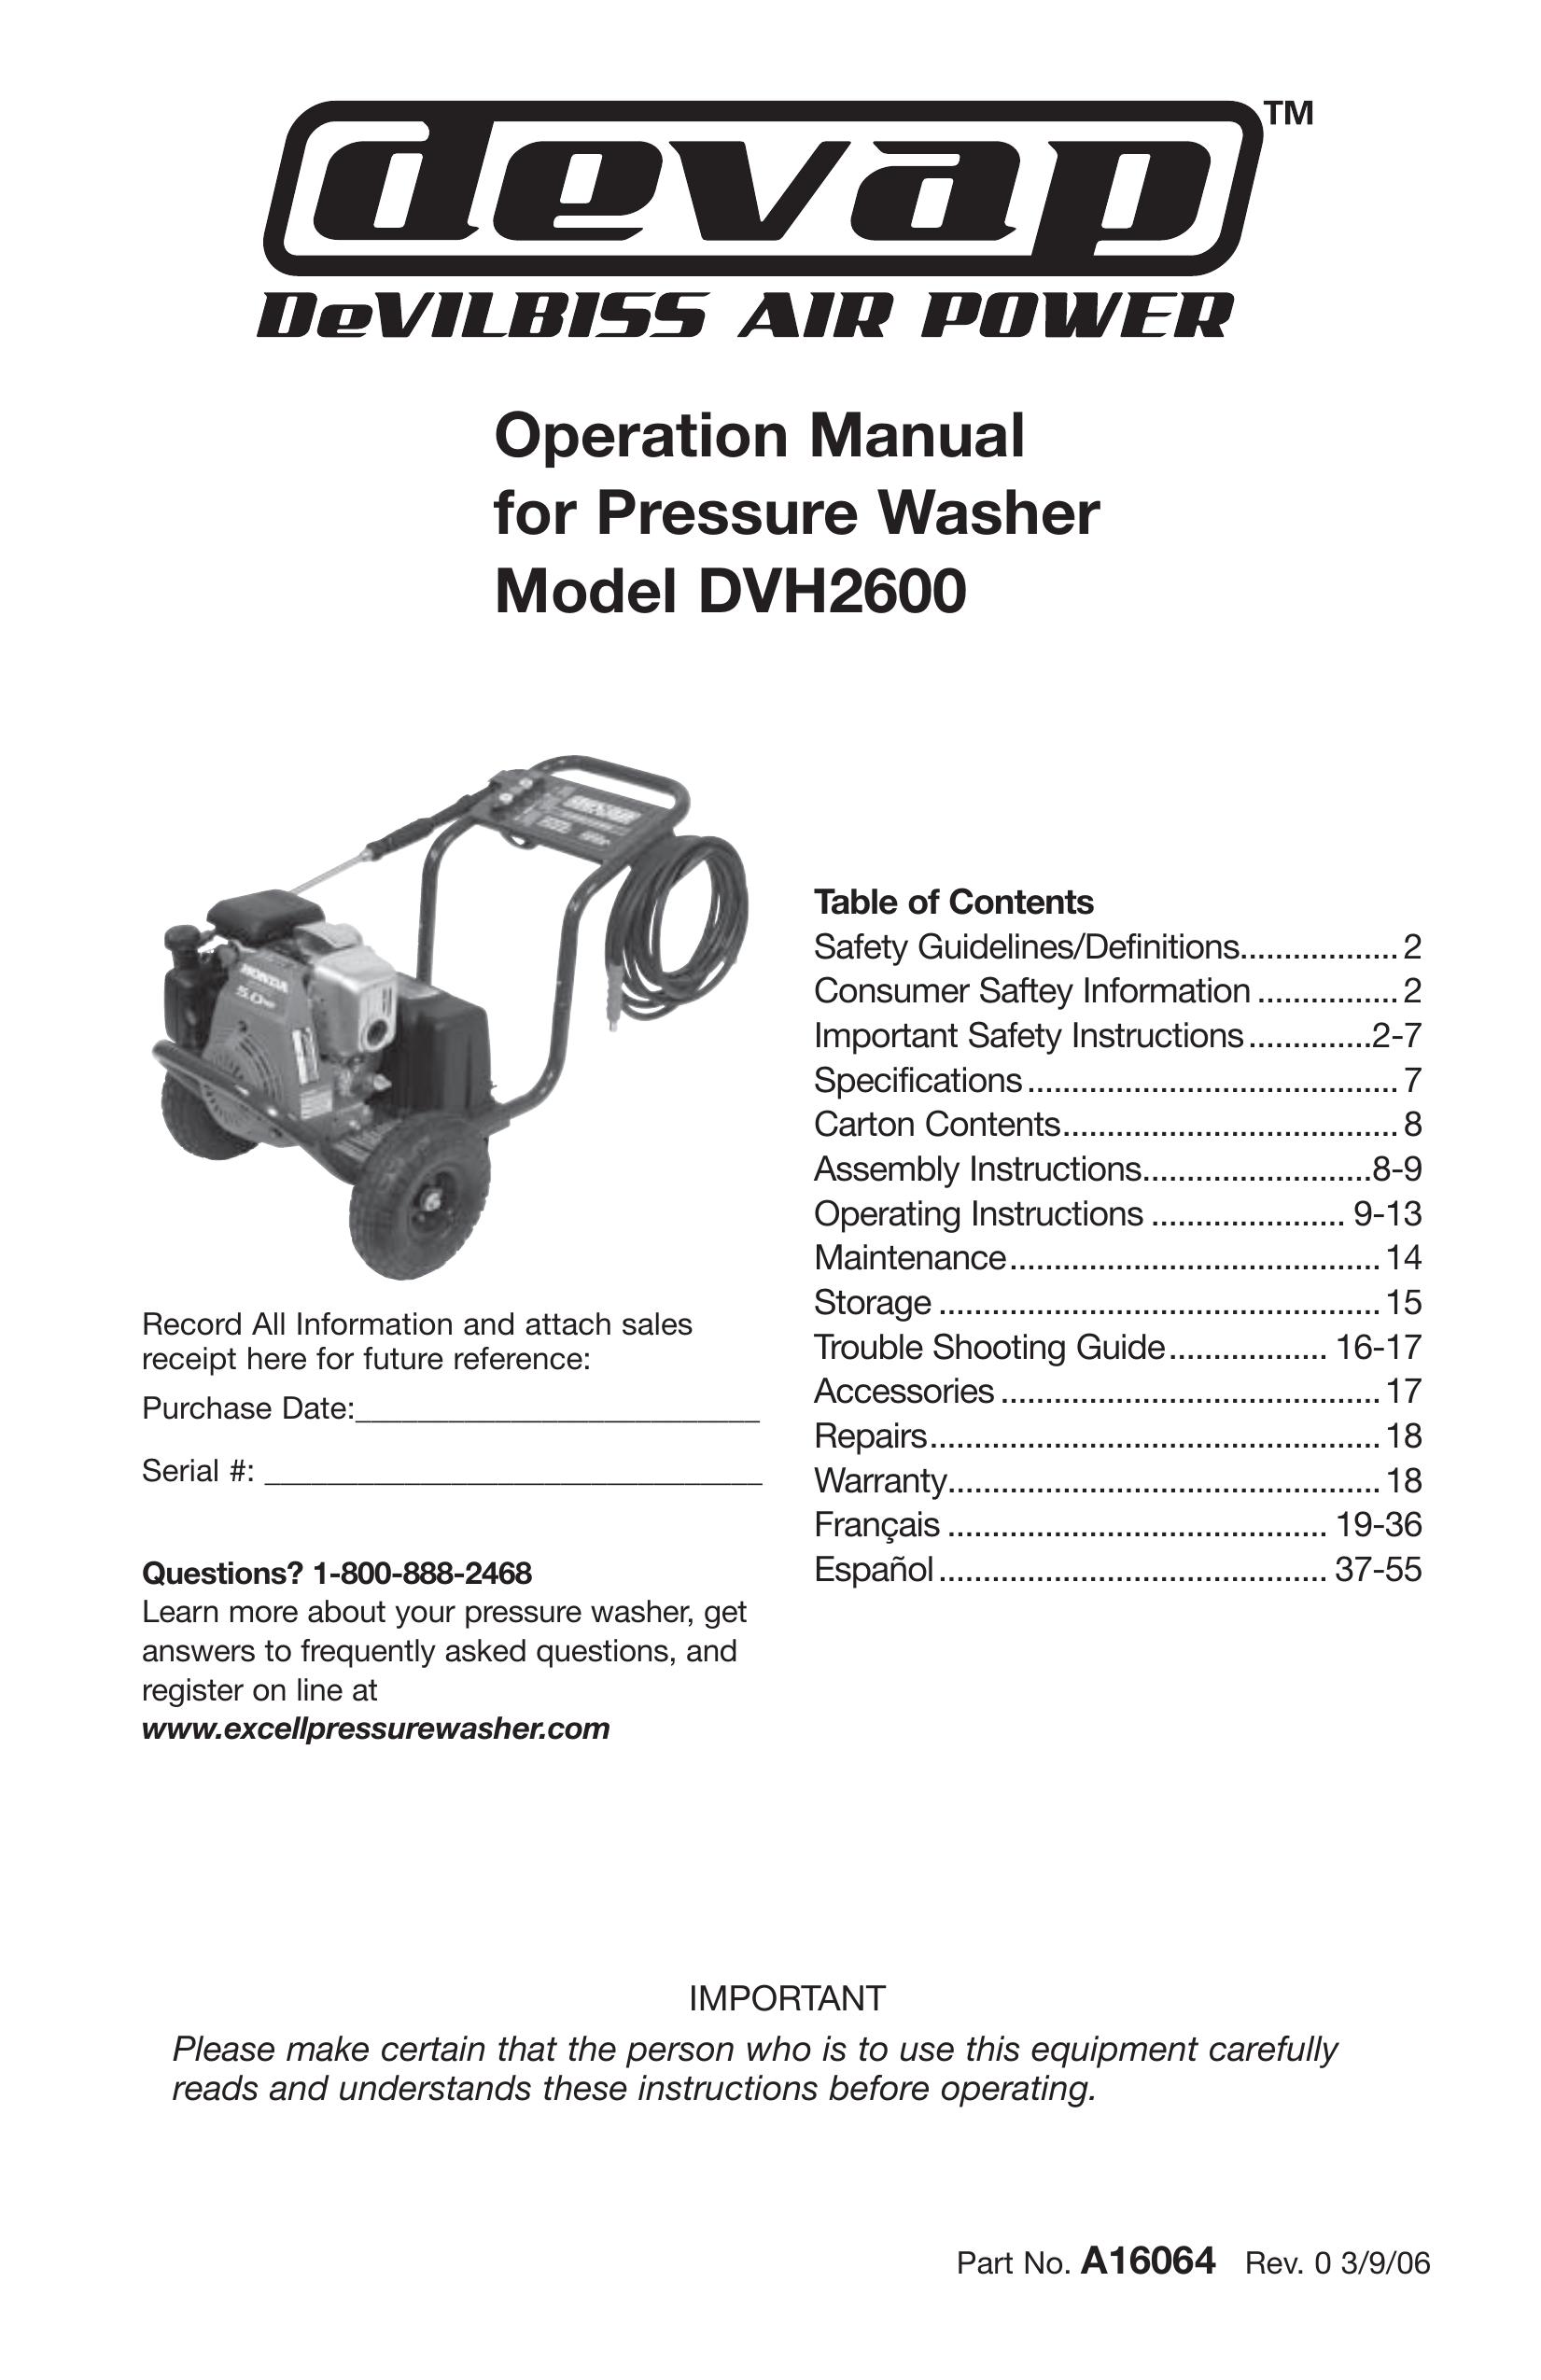 DeVillbiss Air Power Company DVH2600 Pressure Washer User Manual